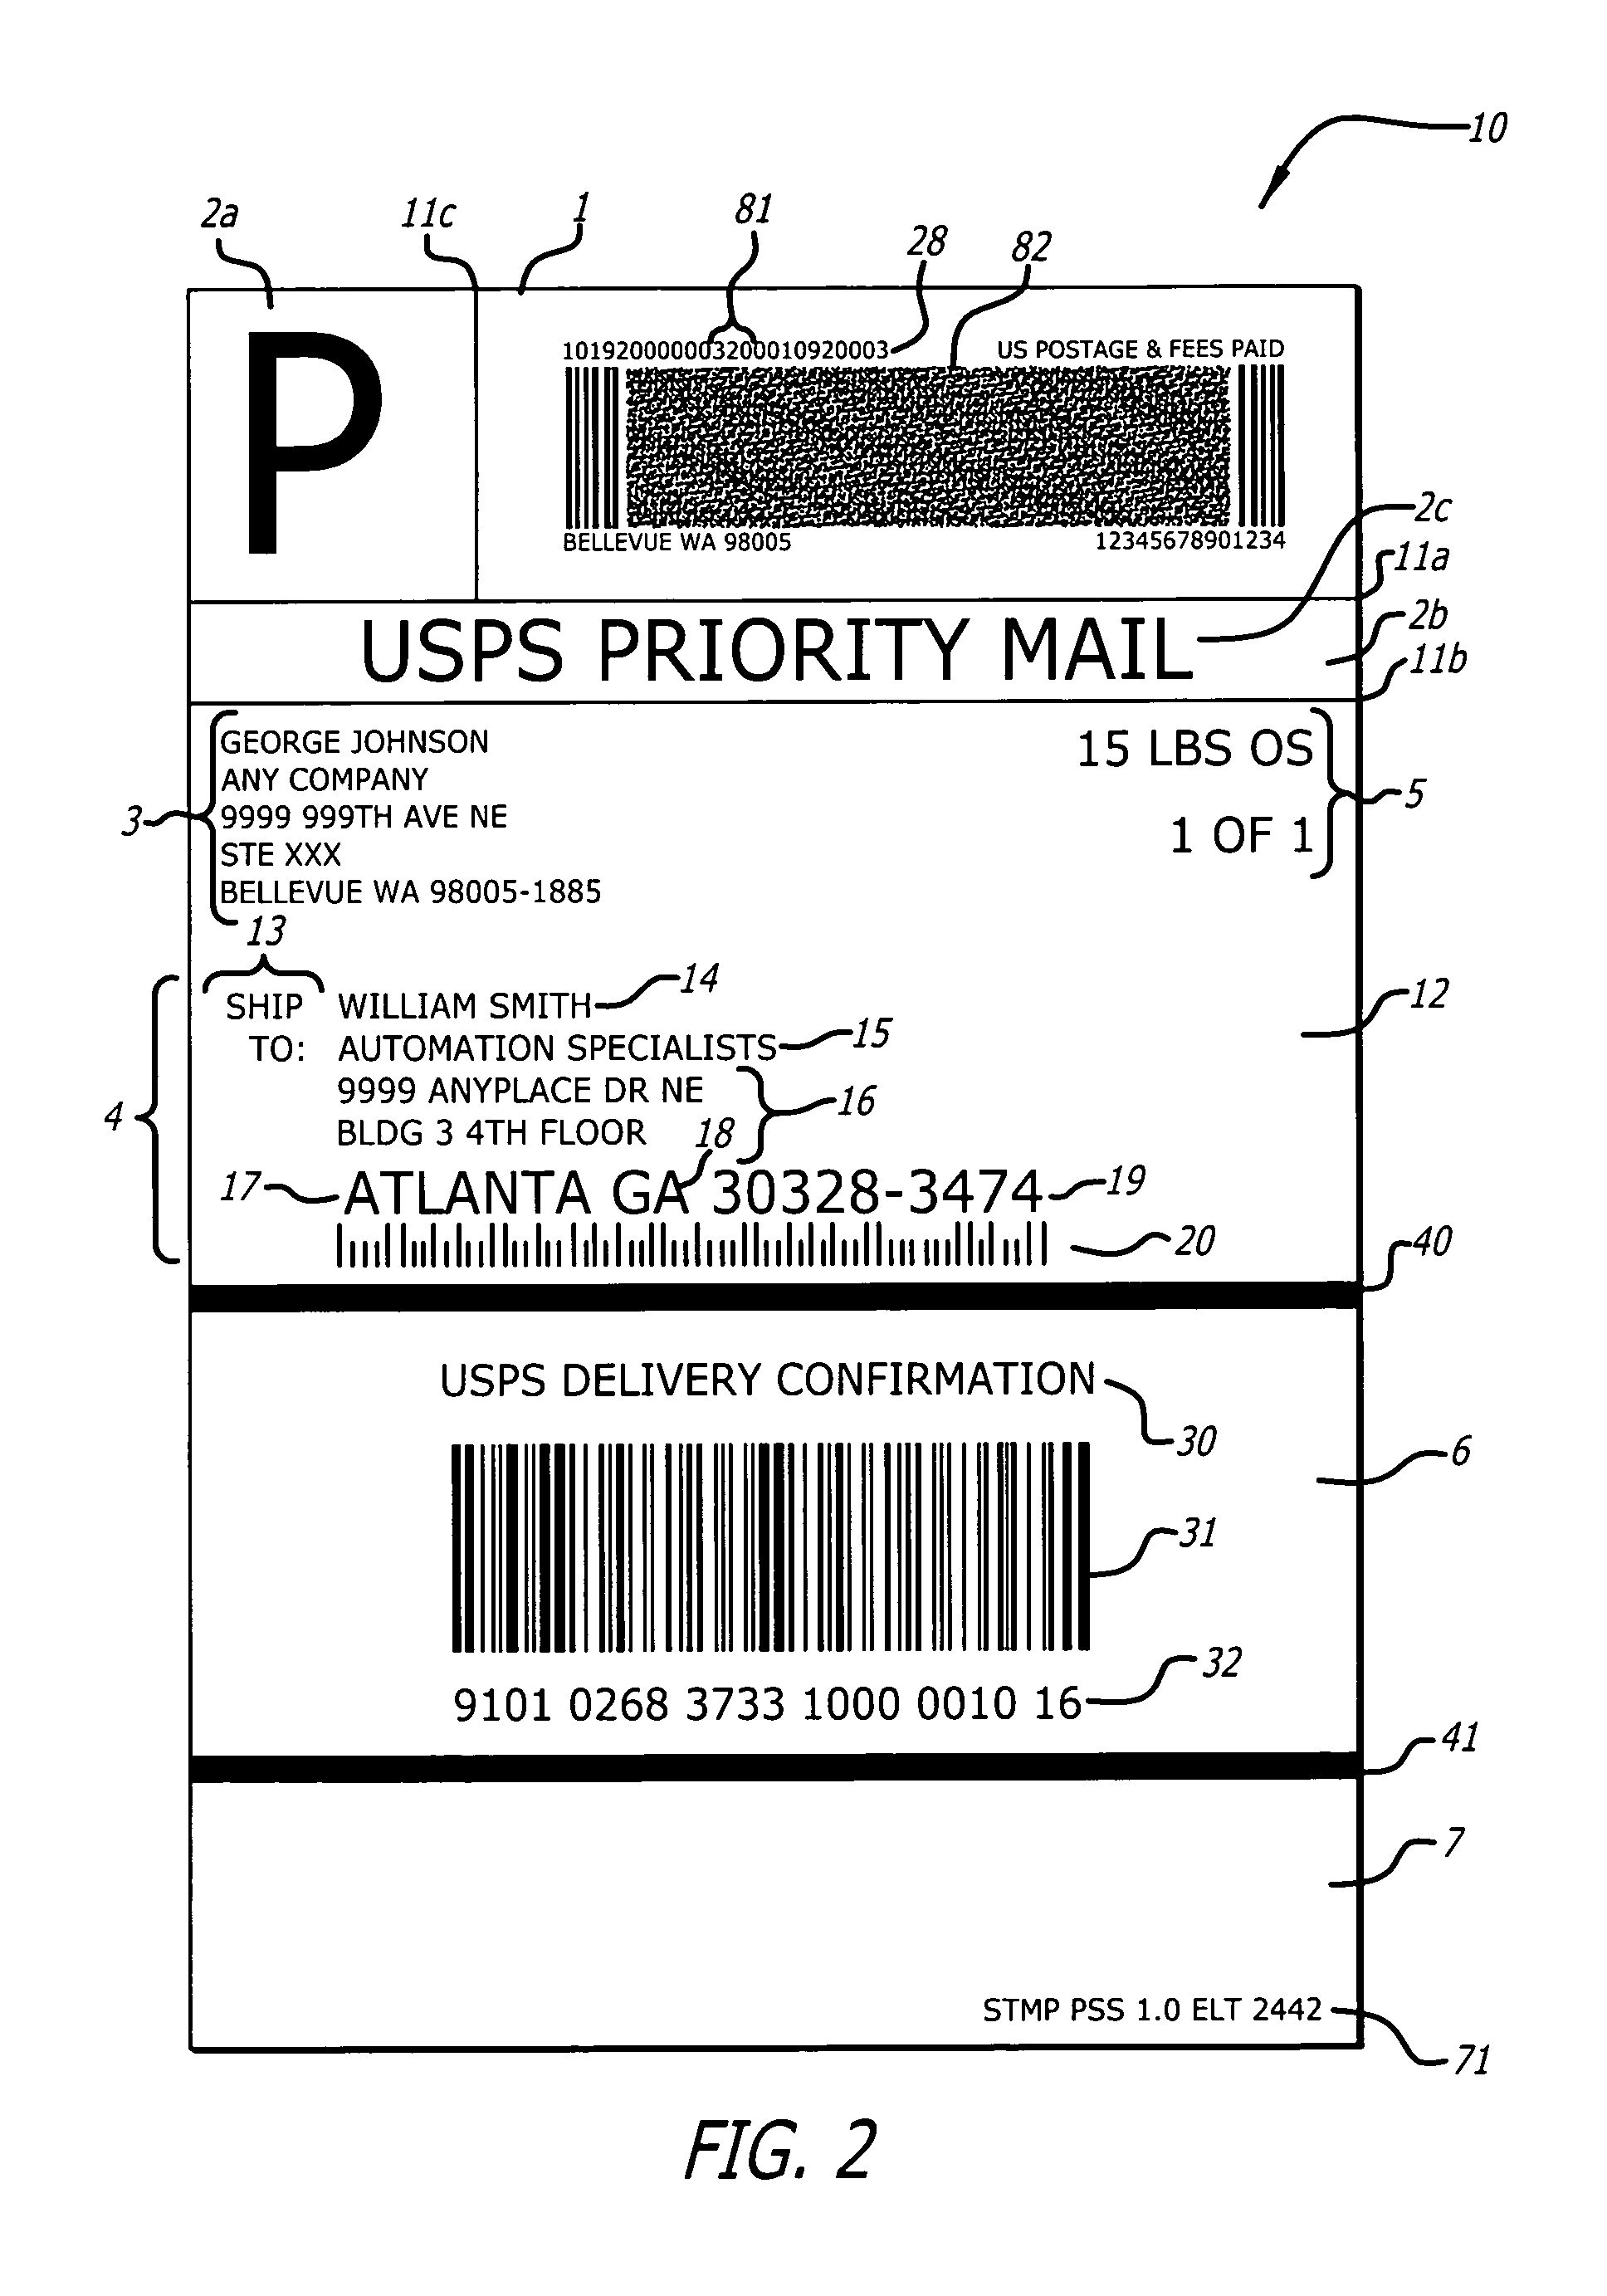 Postal shipping label